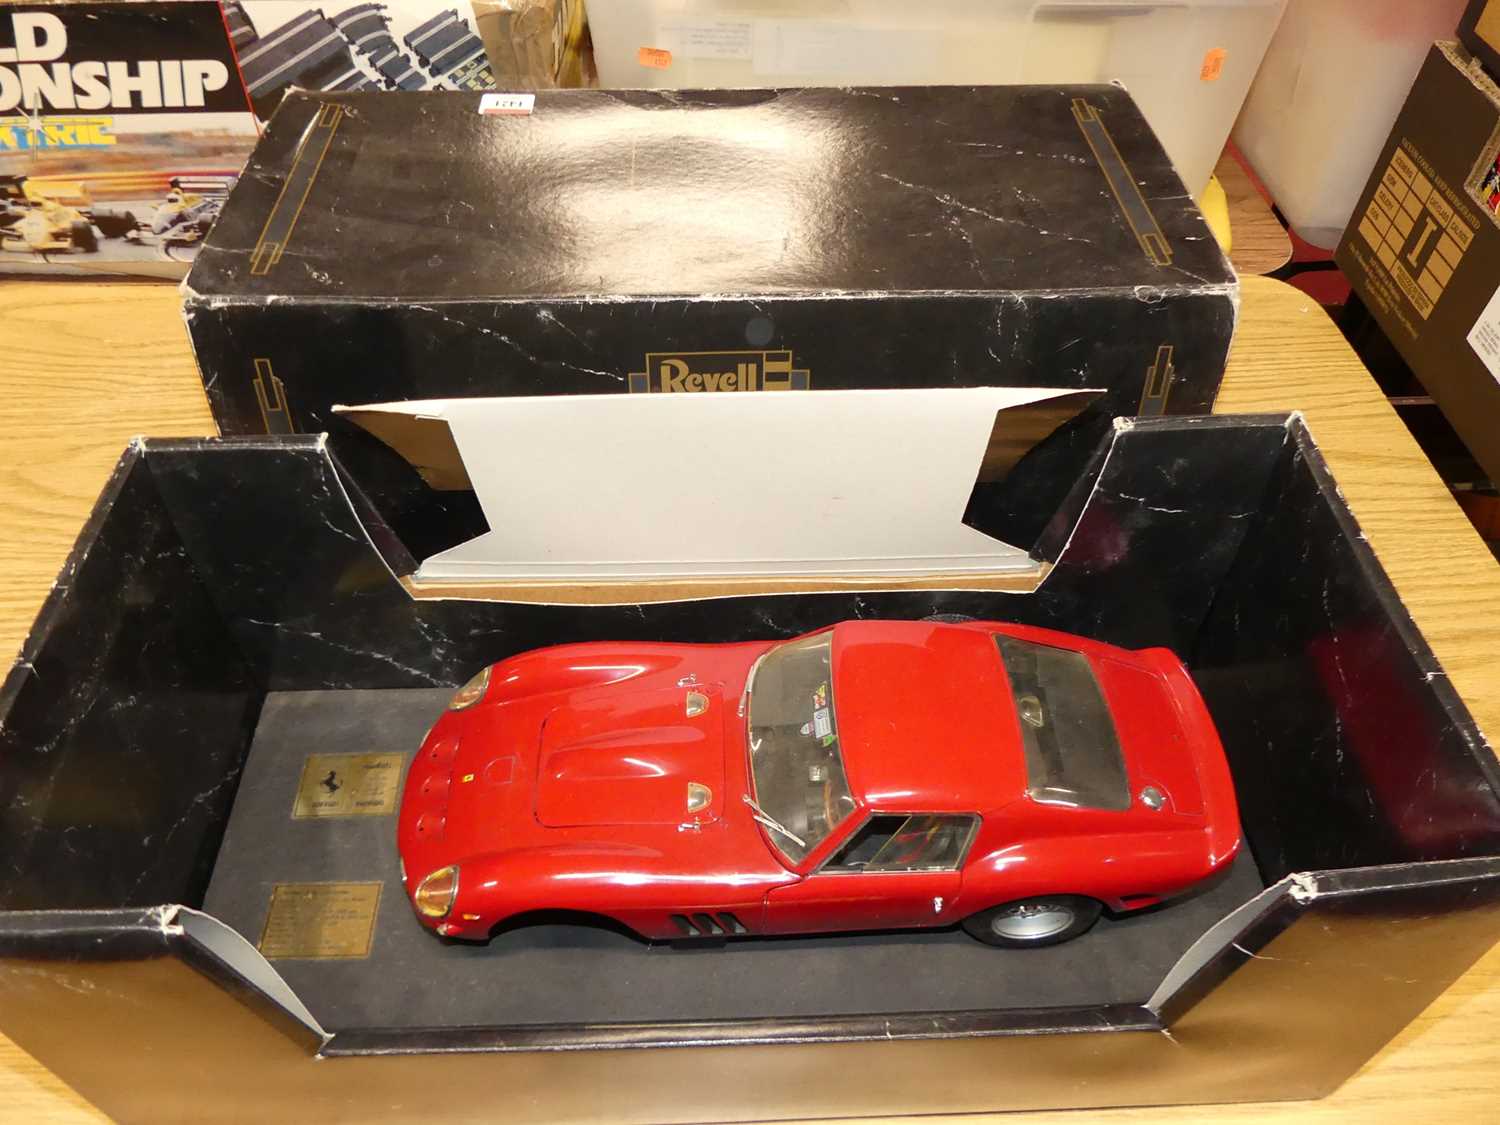 A Revell 1/12 scale model of a 1964 Ferrari 250 GTO housed in the original box